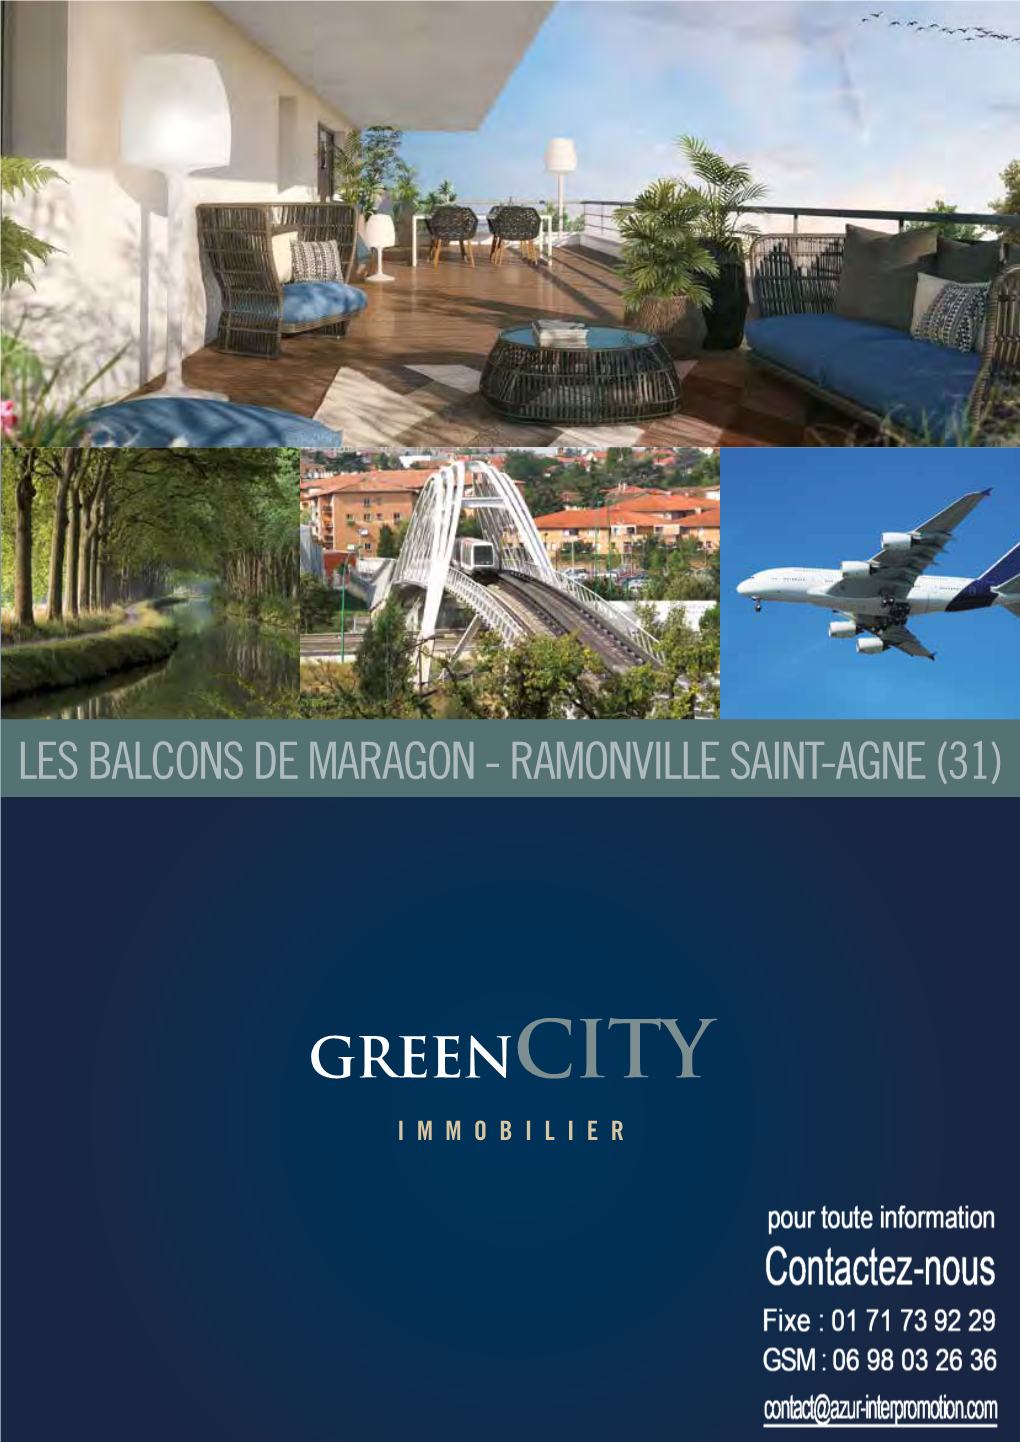 Ramonville Saint-Agne Greencity